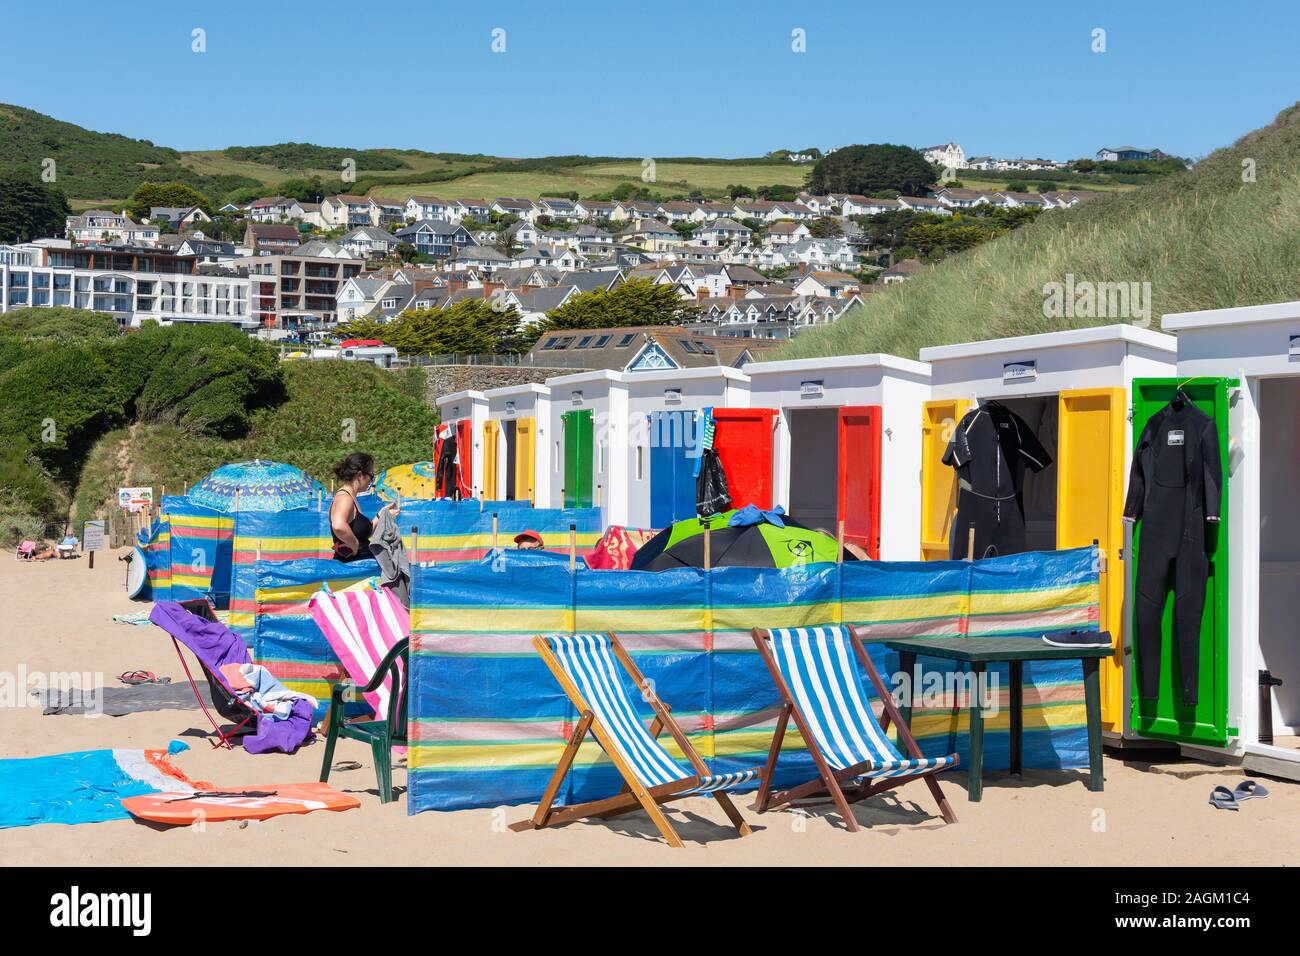 Beach huts with windbreak, Woolacombe Sands, Woolacombe, Devon, England, United Kingdom Stock Photo